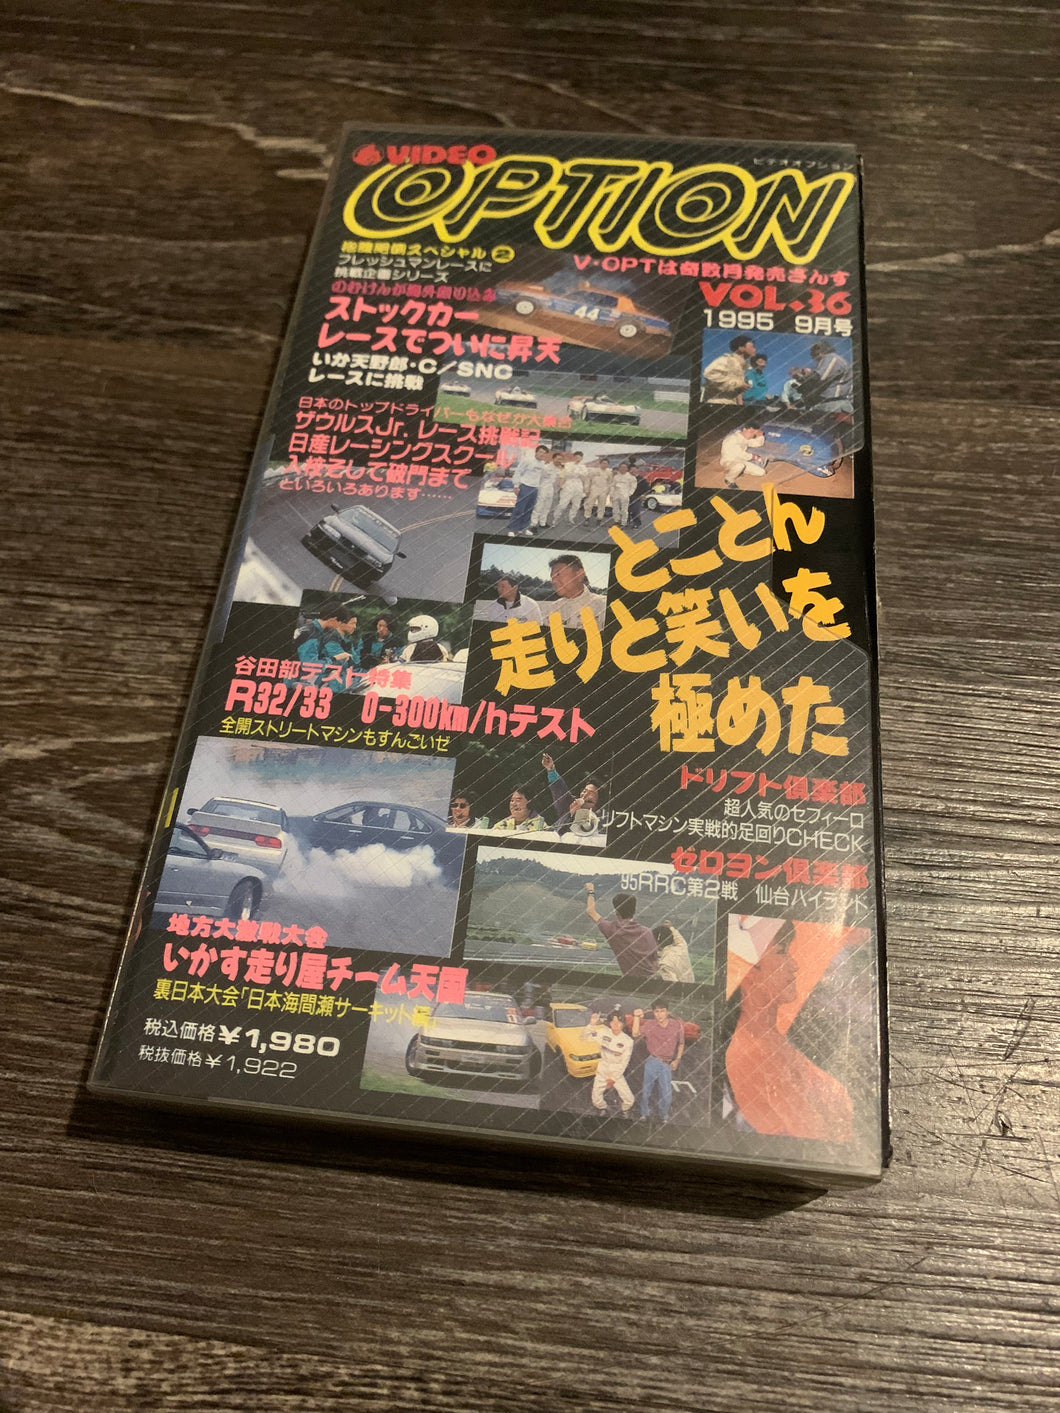 Option VHS Sep. 1995 Volume 36